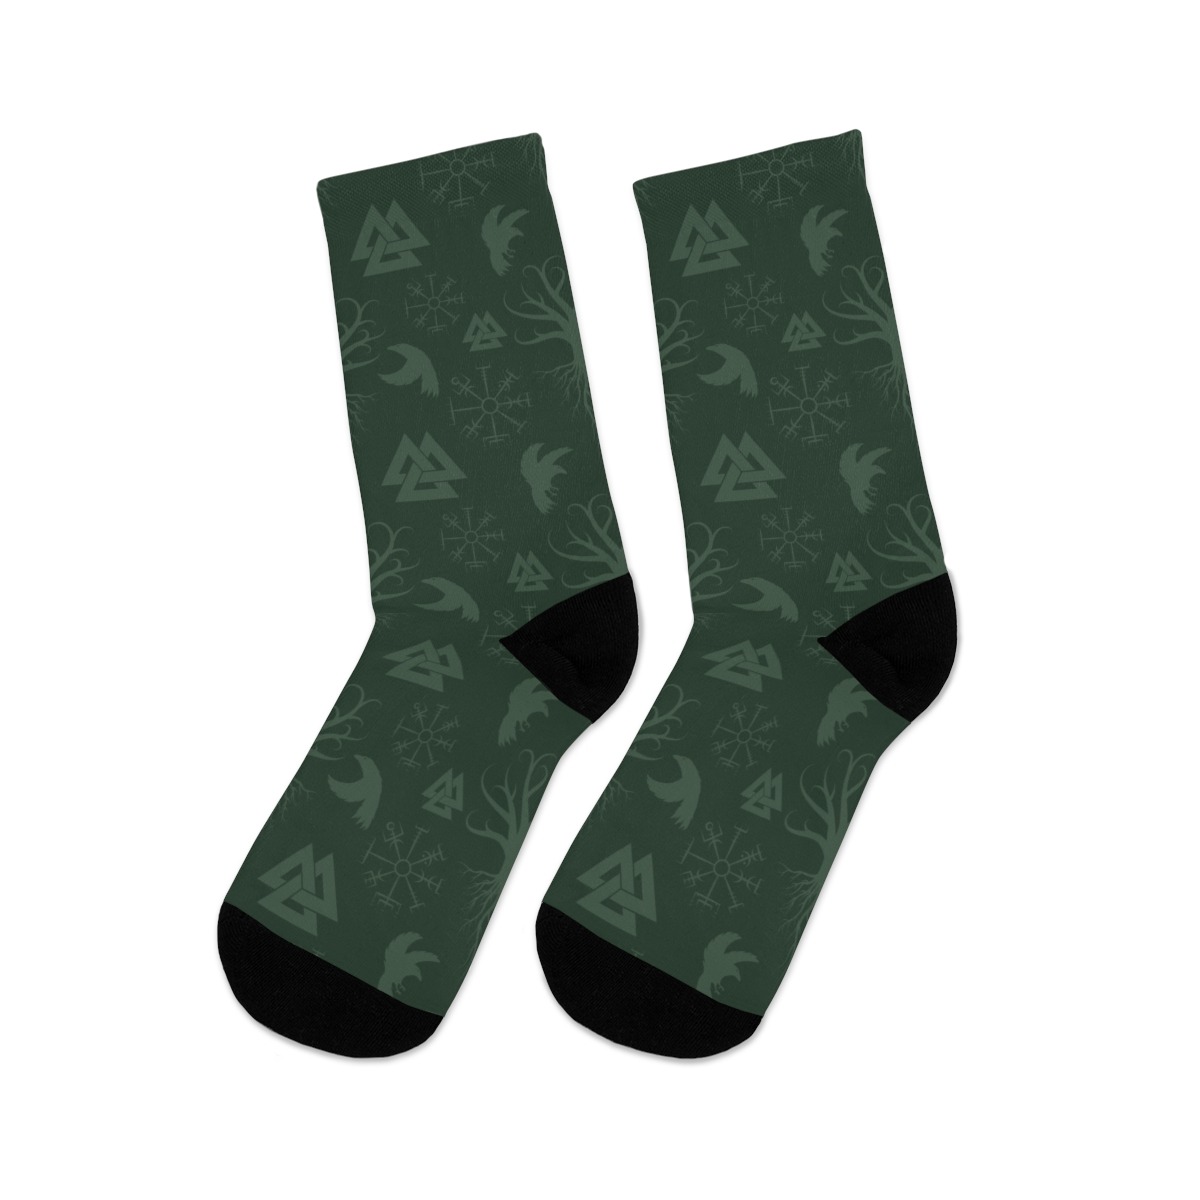 Green Norse Symbols Socks